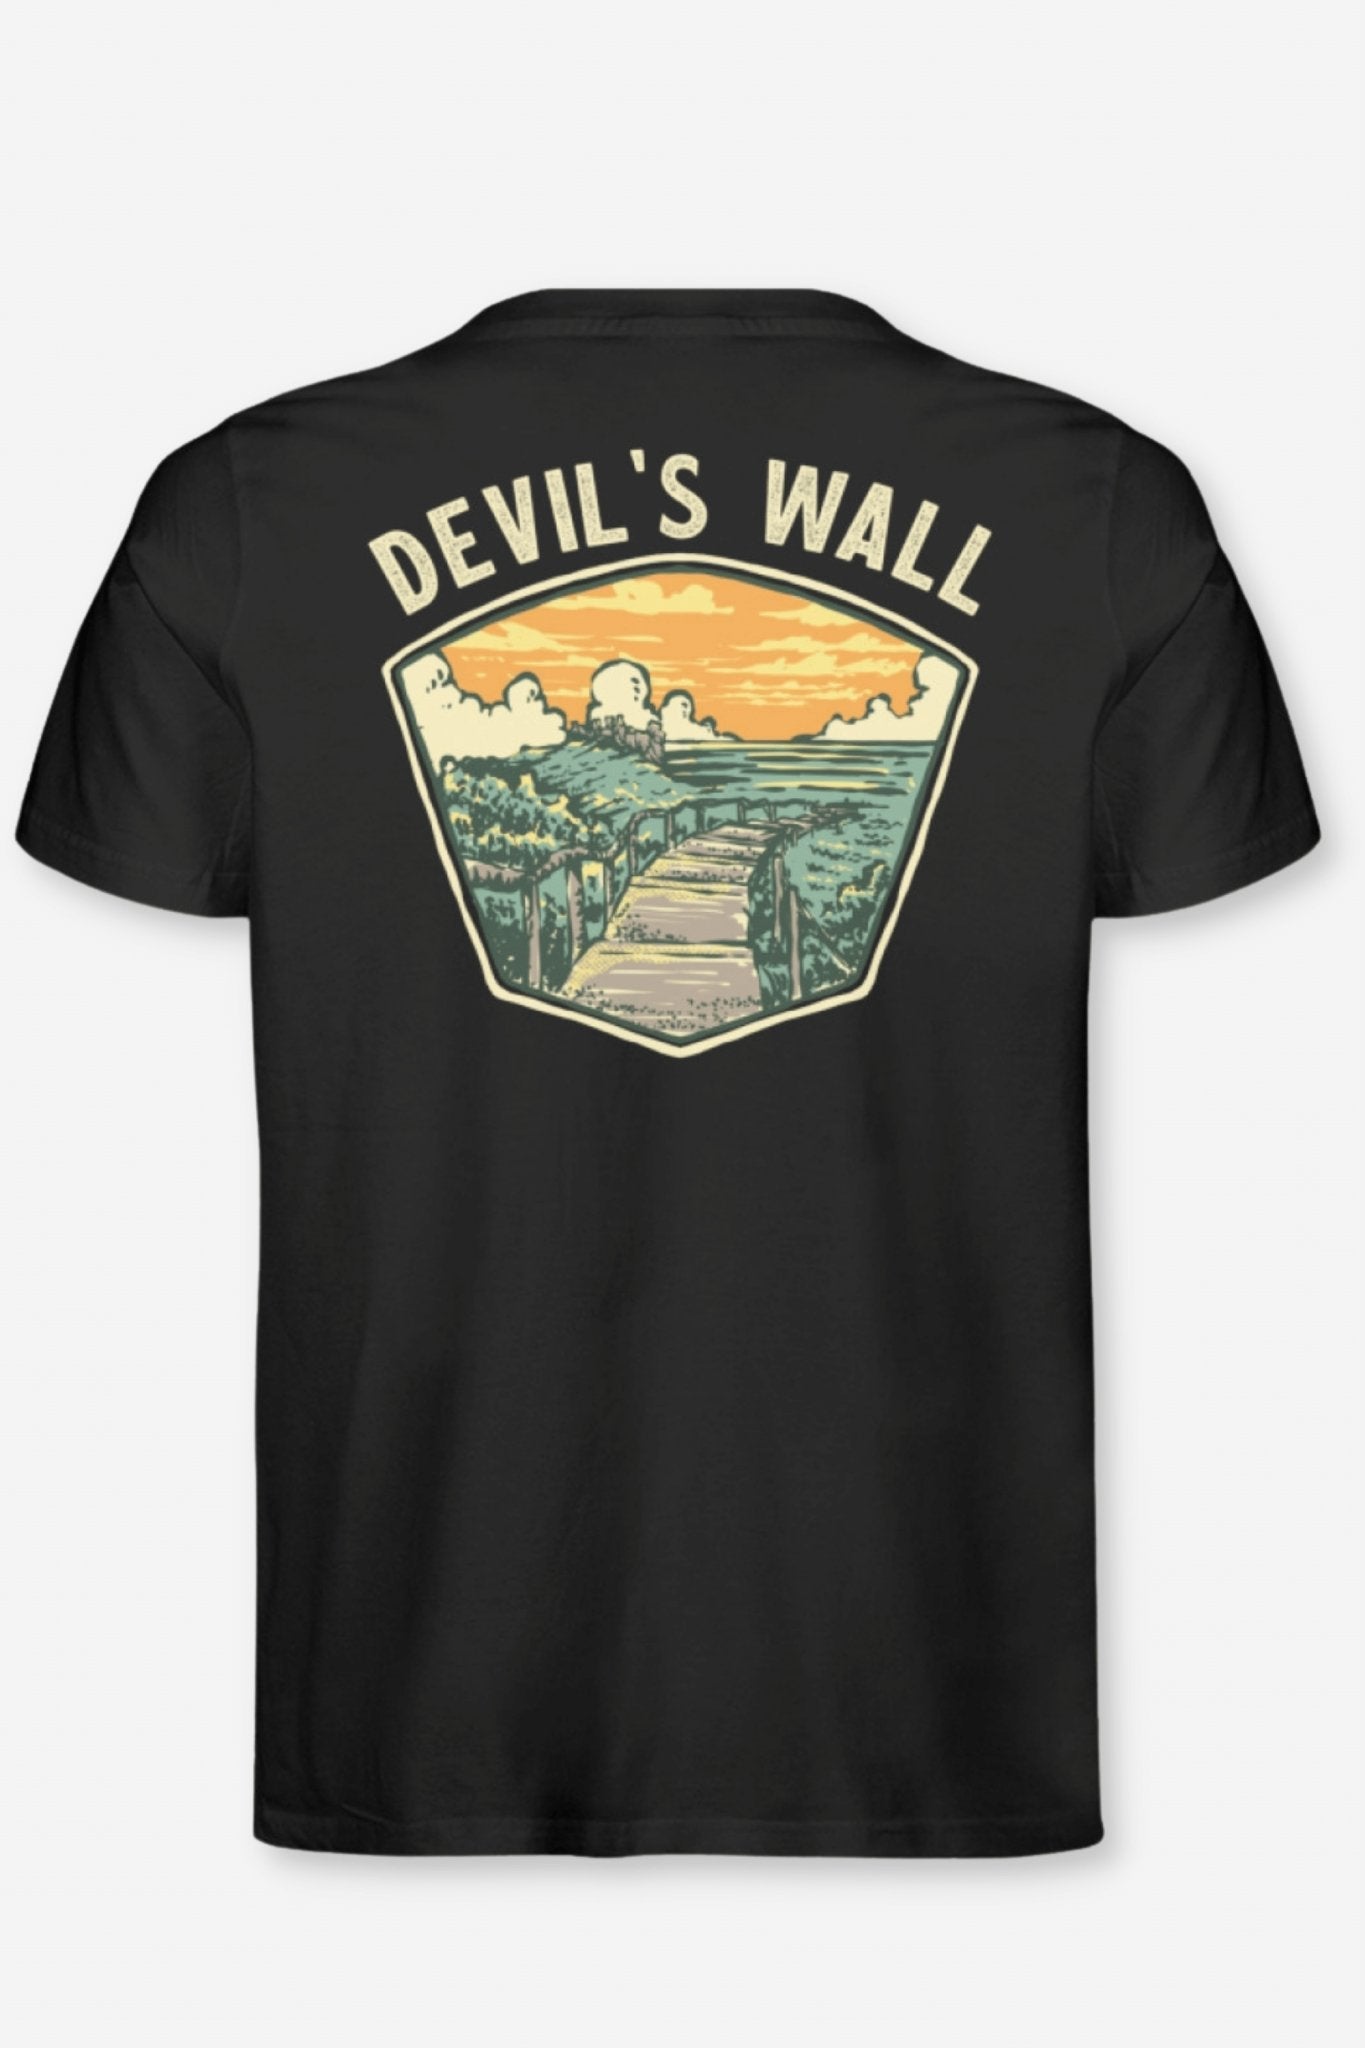 T-Shirt Devil's Wall Unisex - Heimat Harz Shop